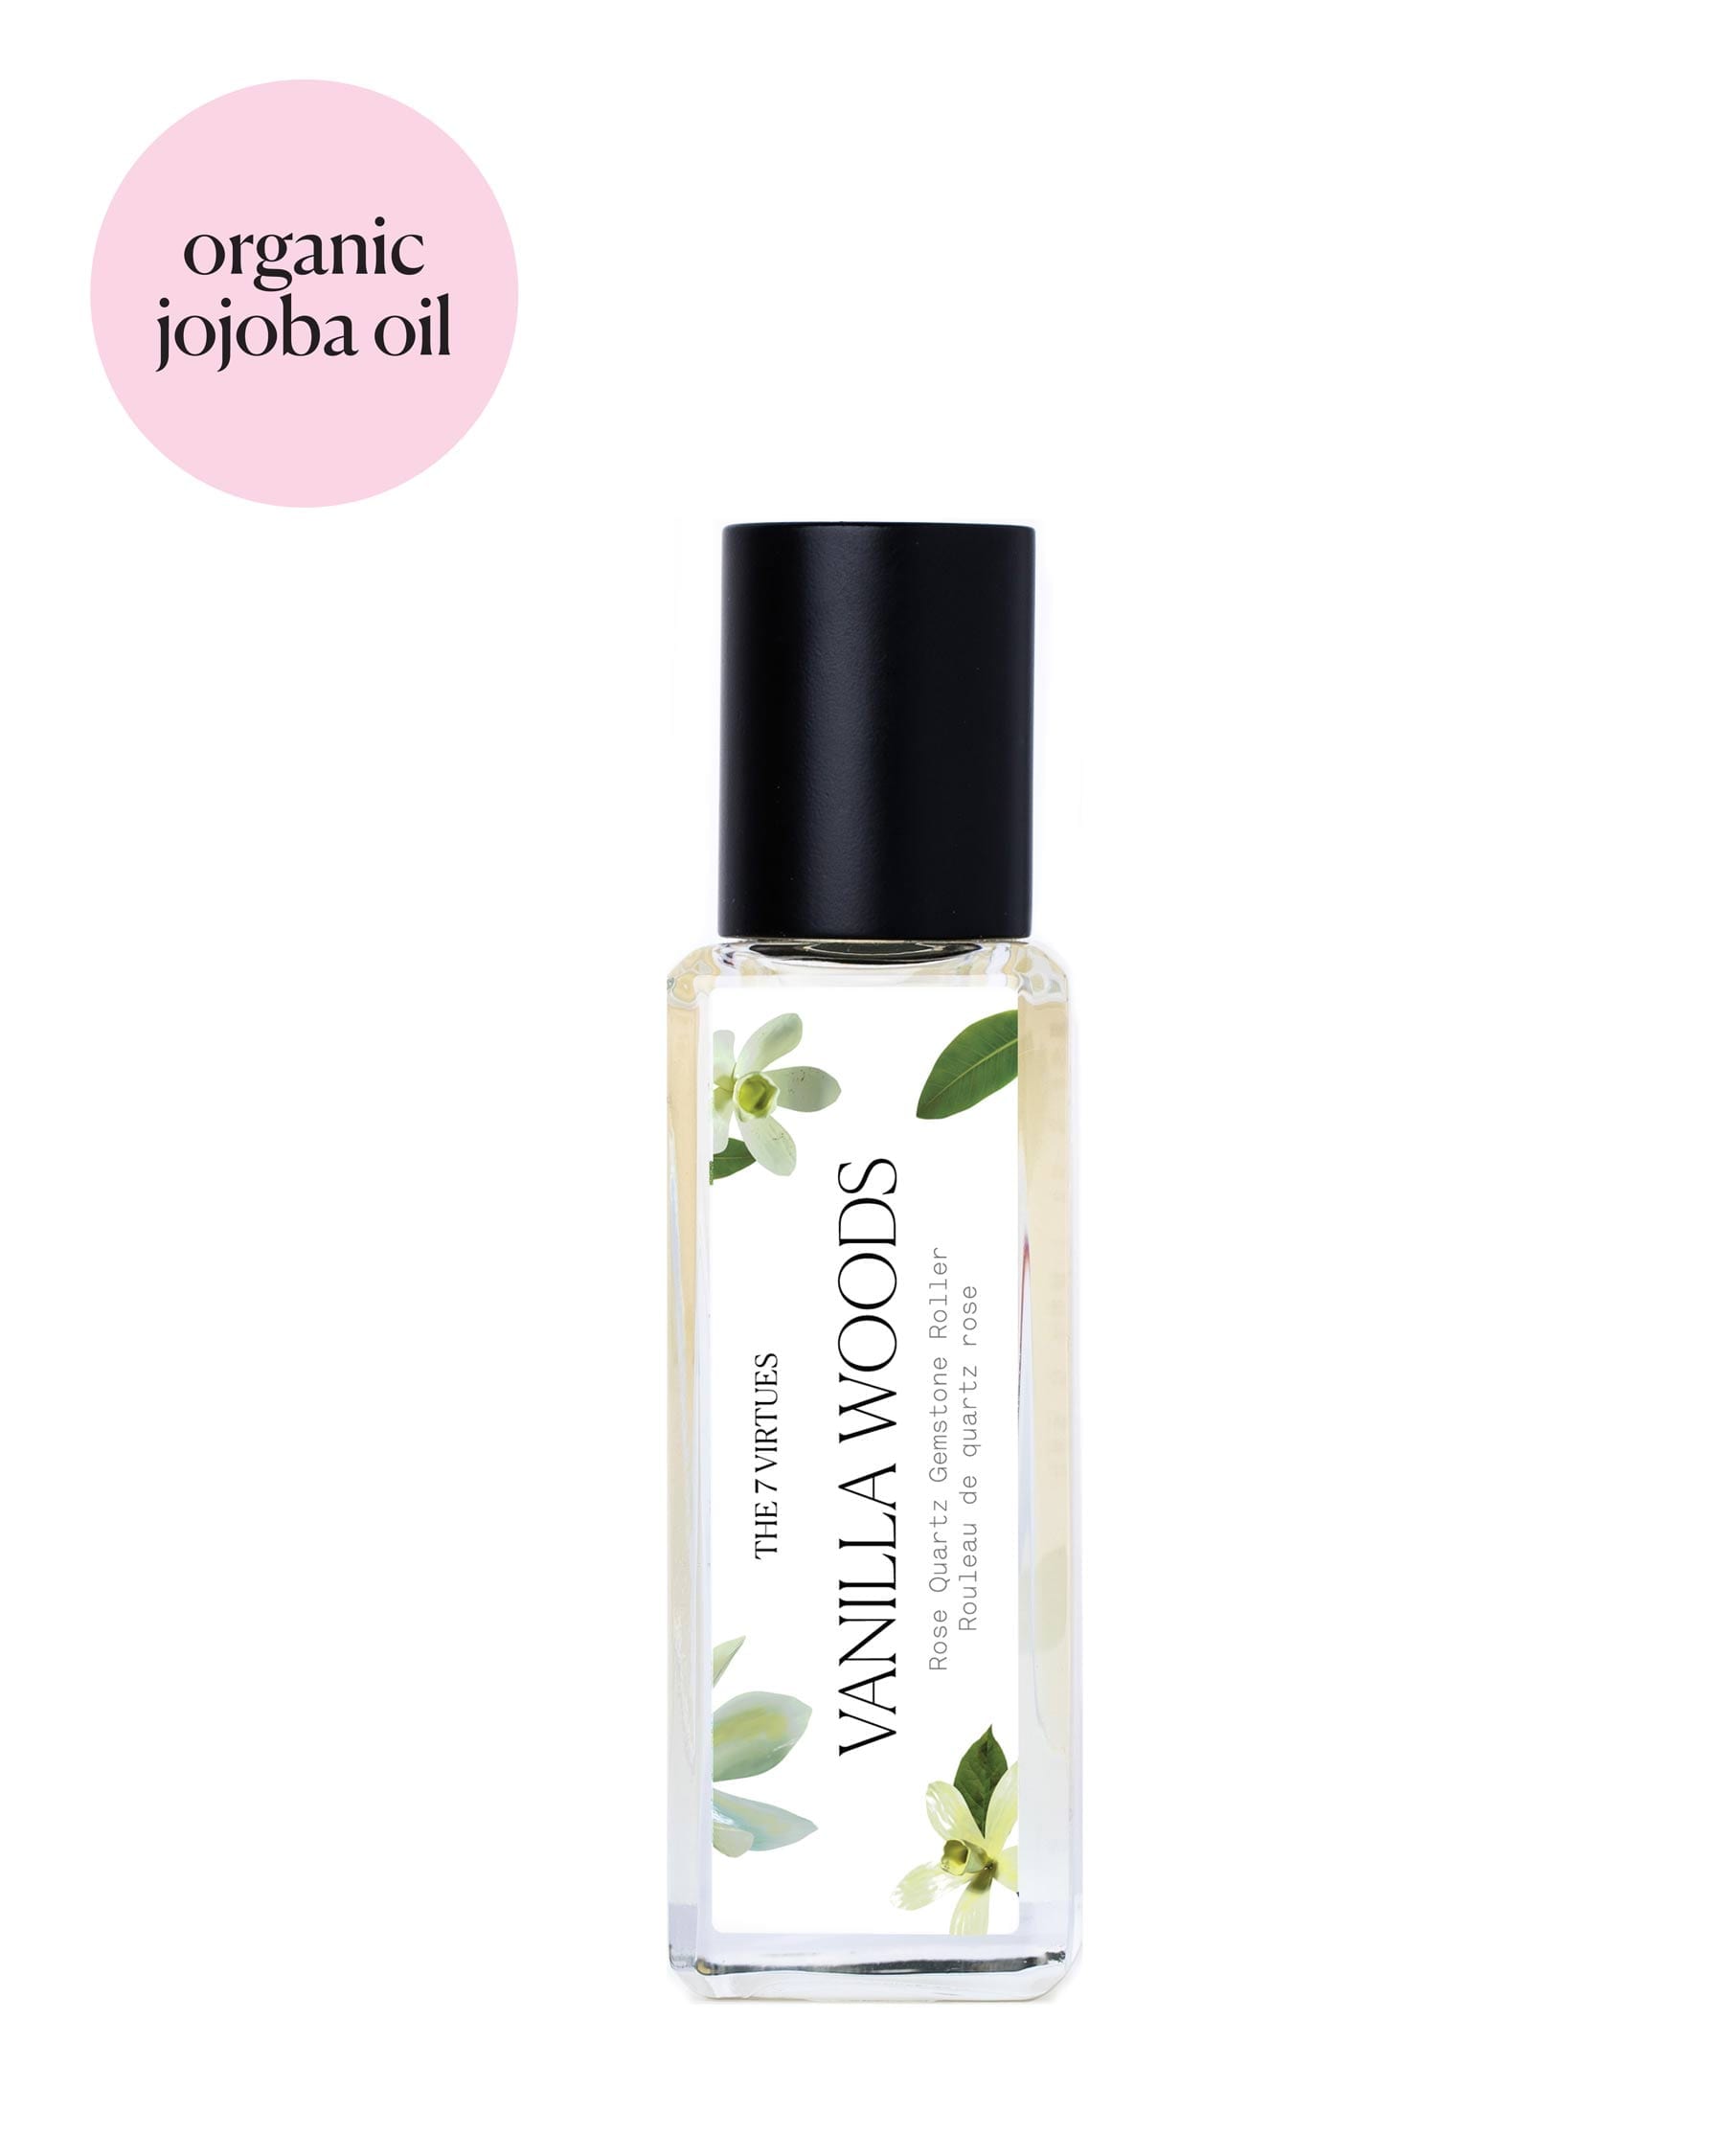 VANILLA WOODS PERFUME OIL – The 7 Virtues Beauty Inc.